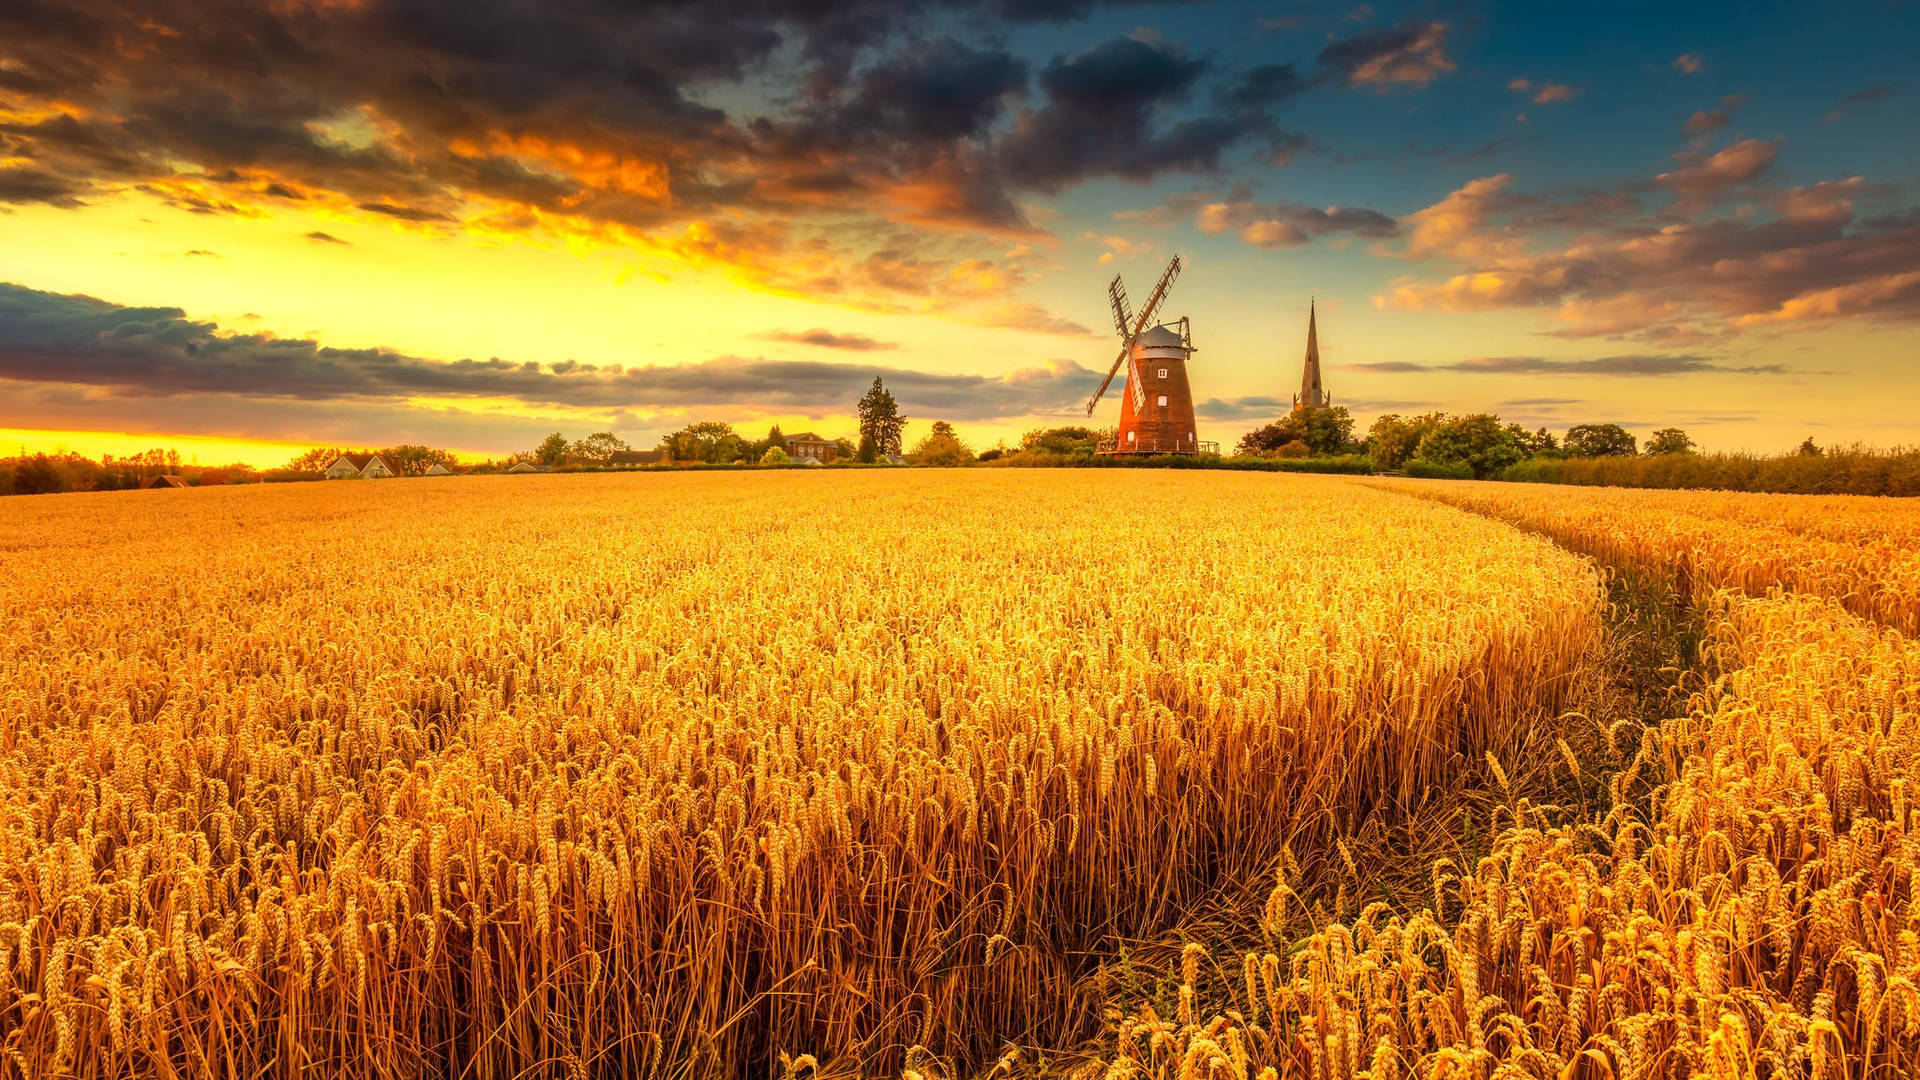 Wheat Field With Windmill Wallpaper